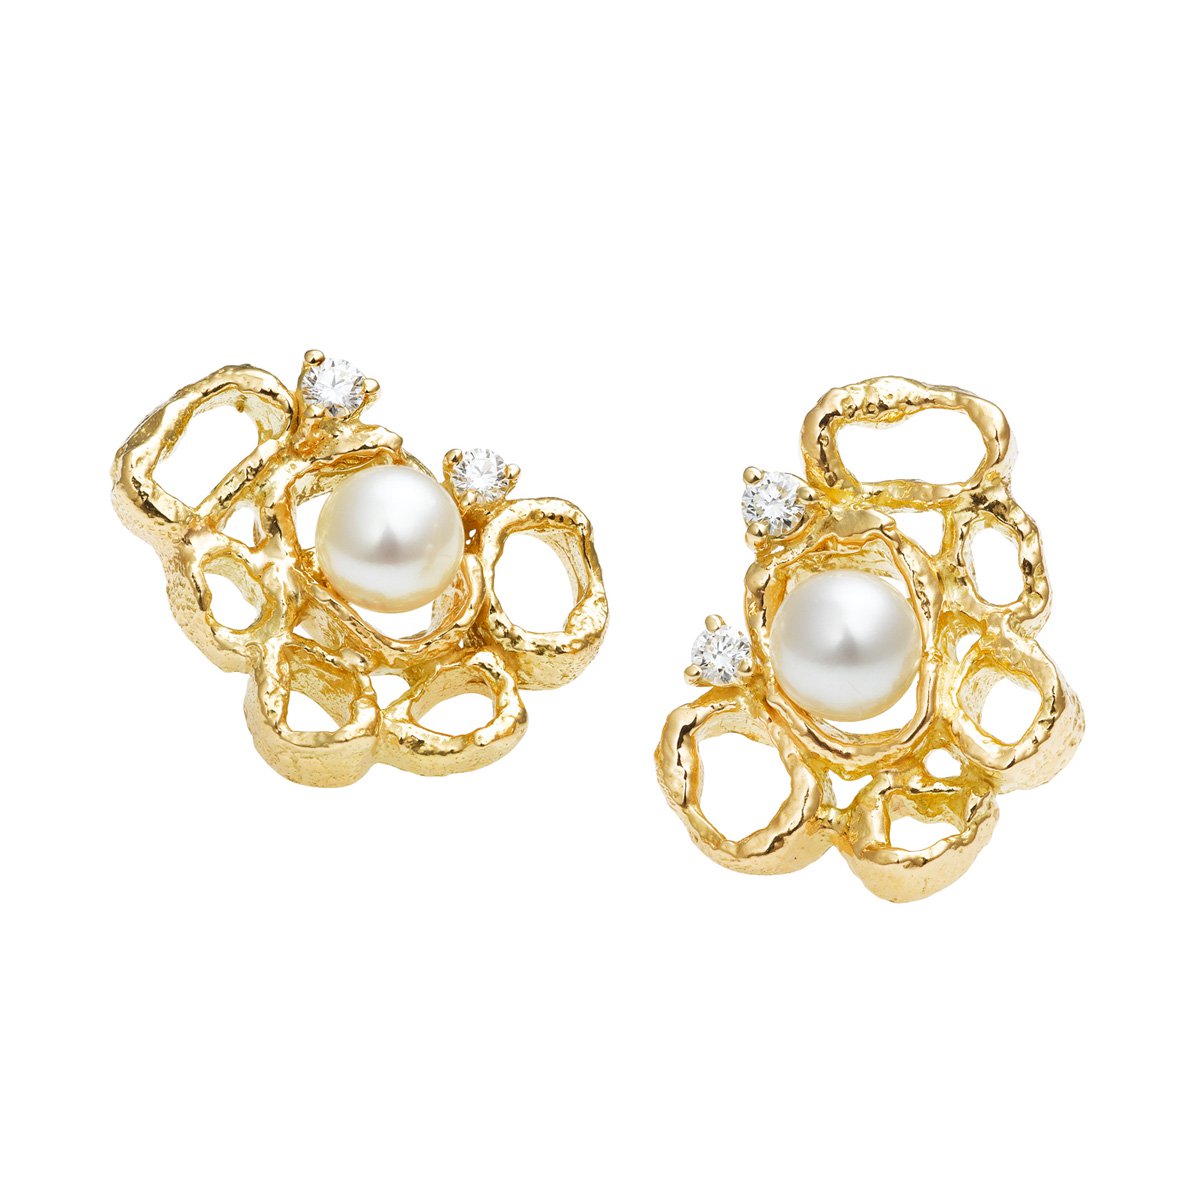 Serene pearl & diamond earrings